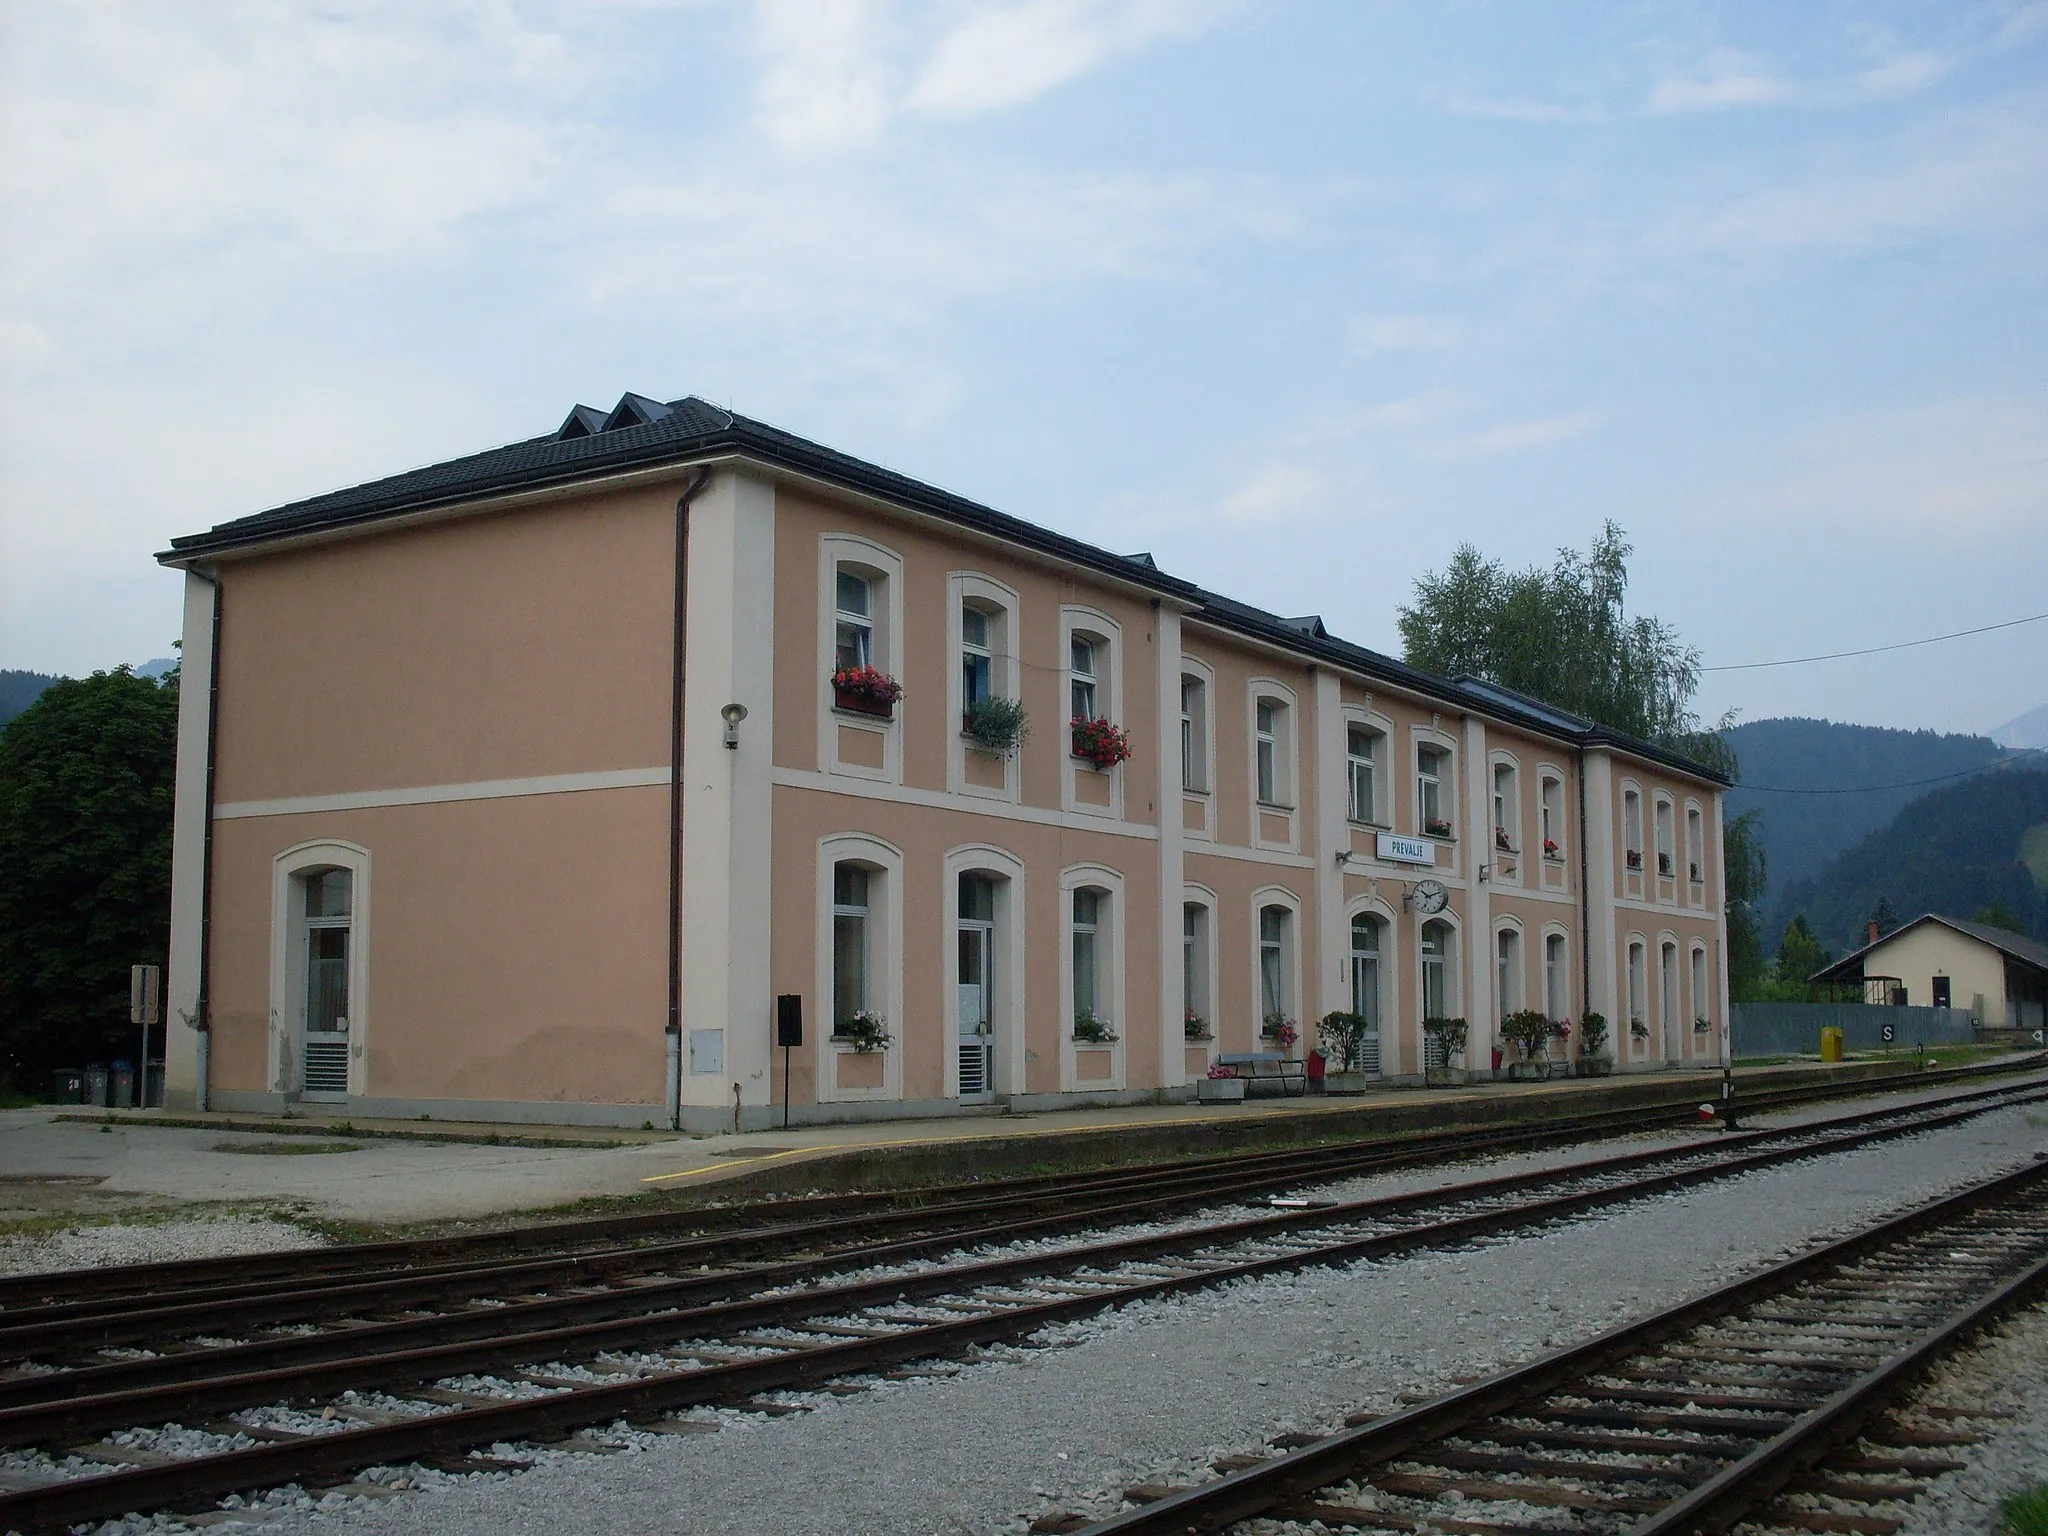 Photo showing: Train station in Prevalje, Slovenia